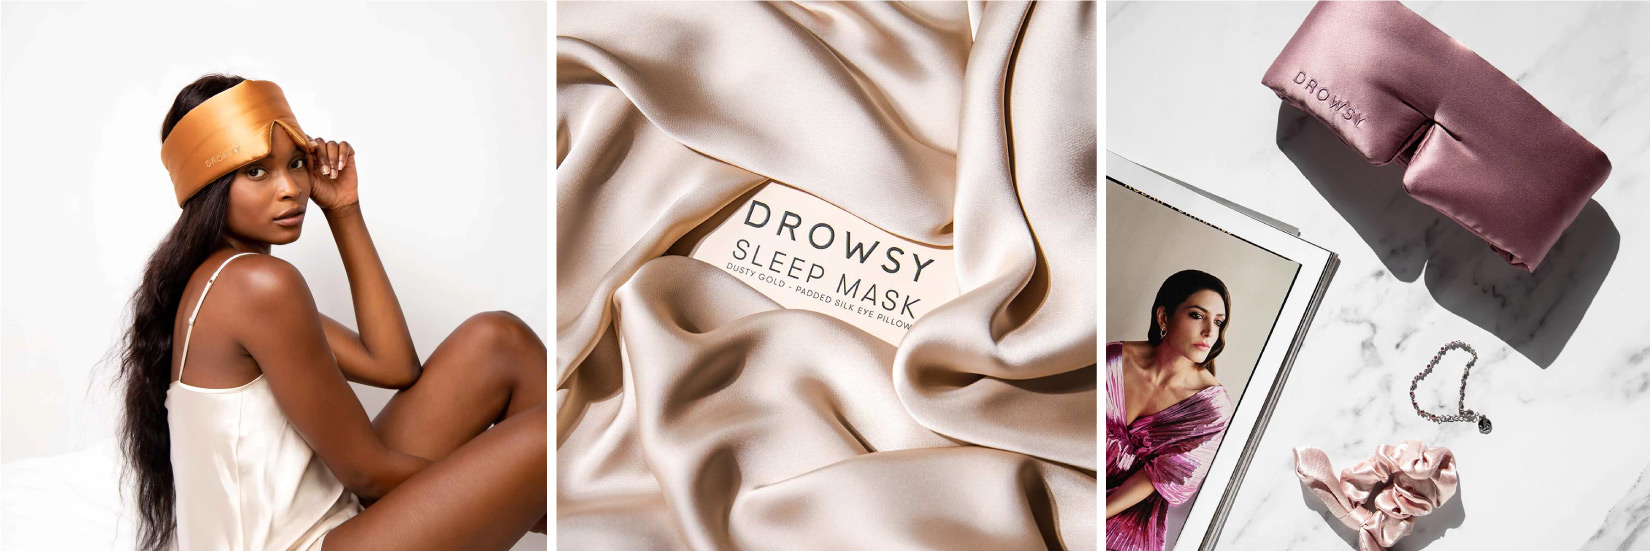 3 Image Collage Of Drowsy Sleep Masks